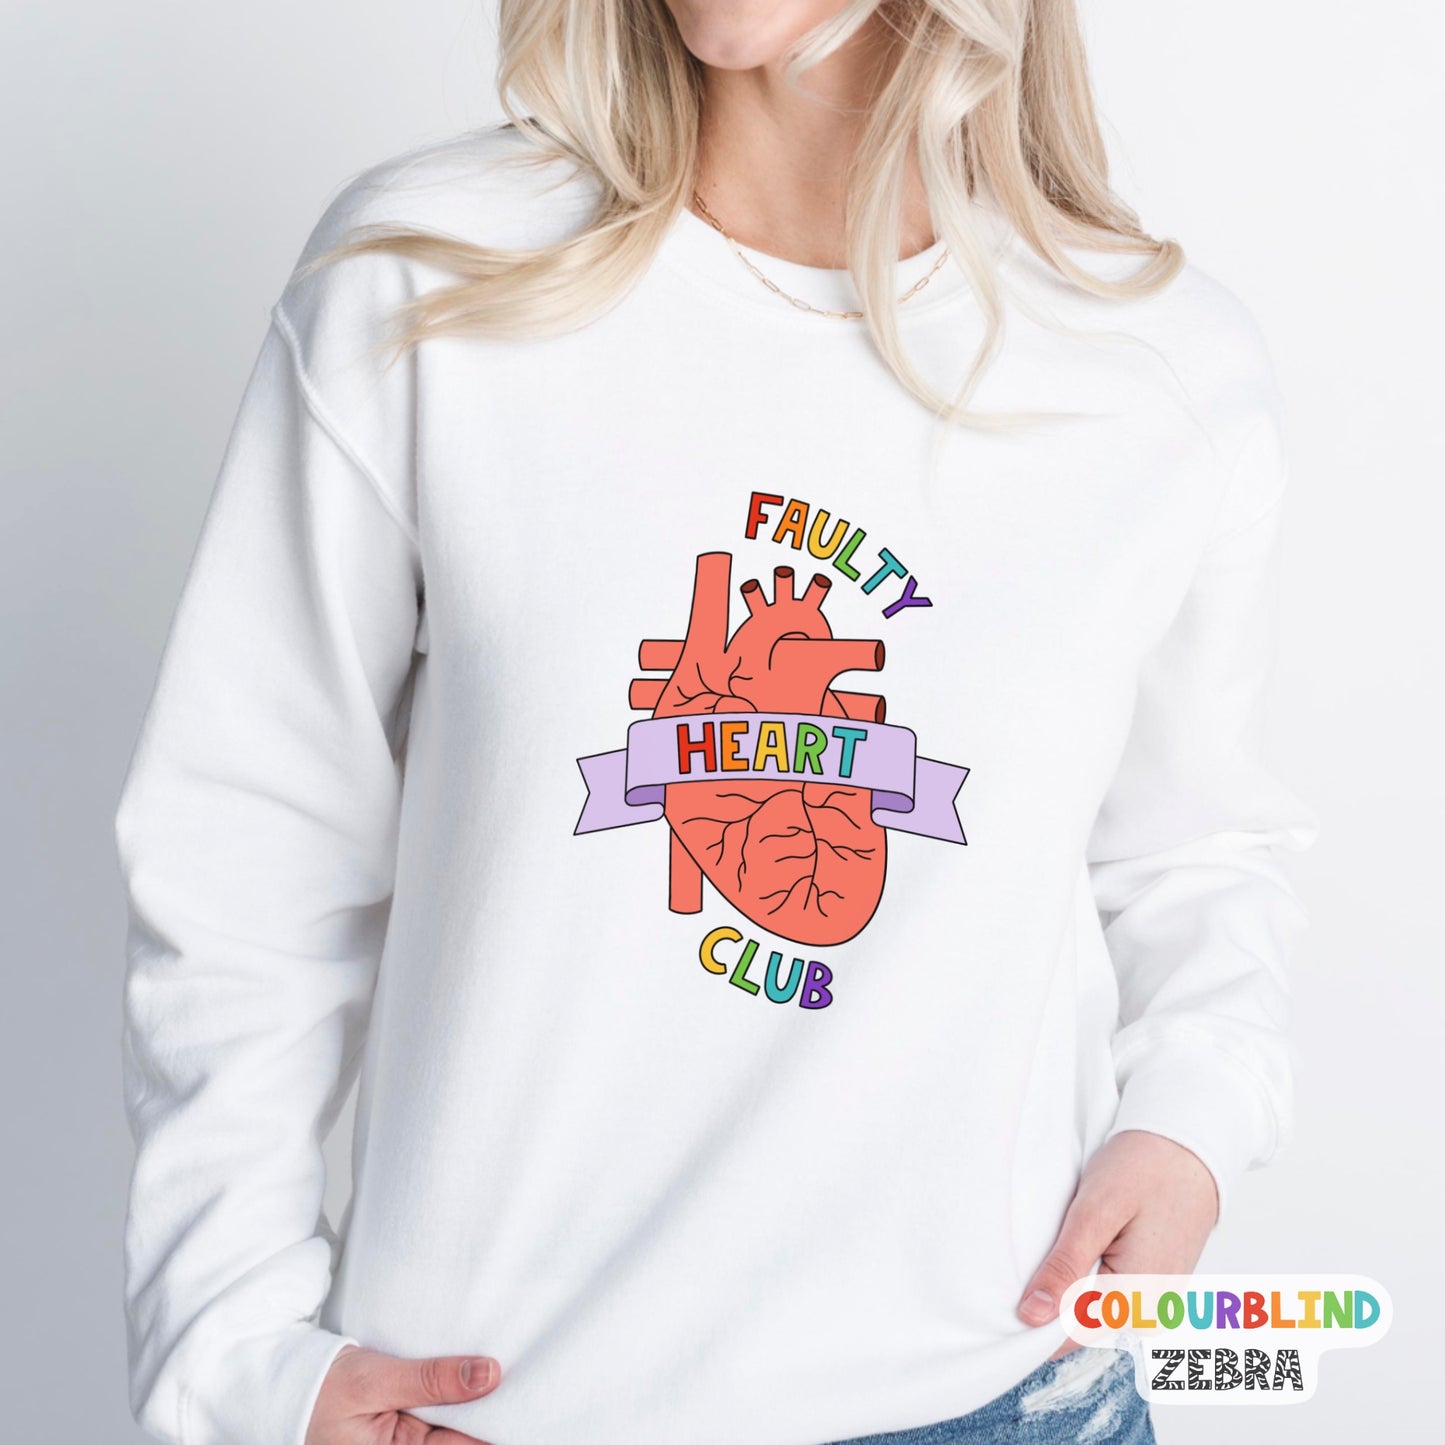 Faulty Heart Club Sweatshirt